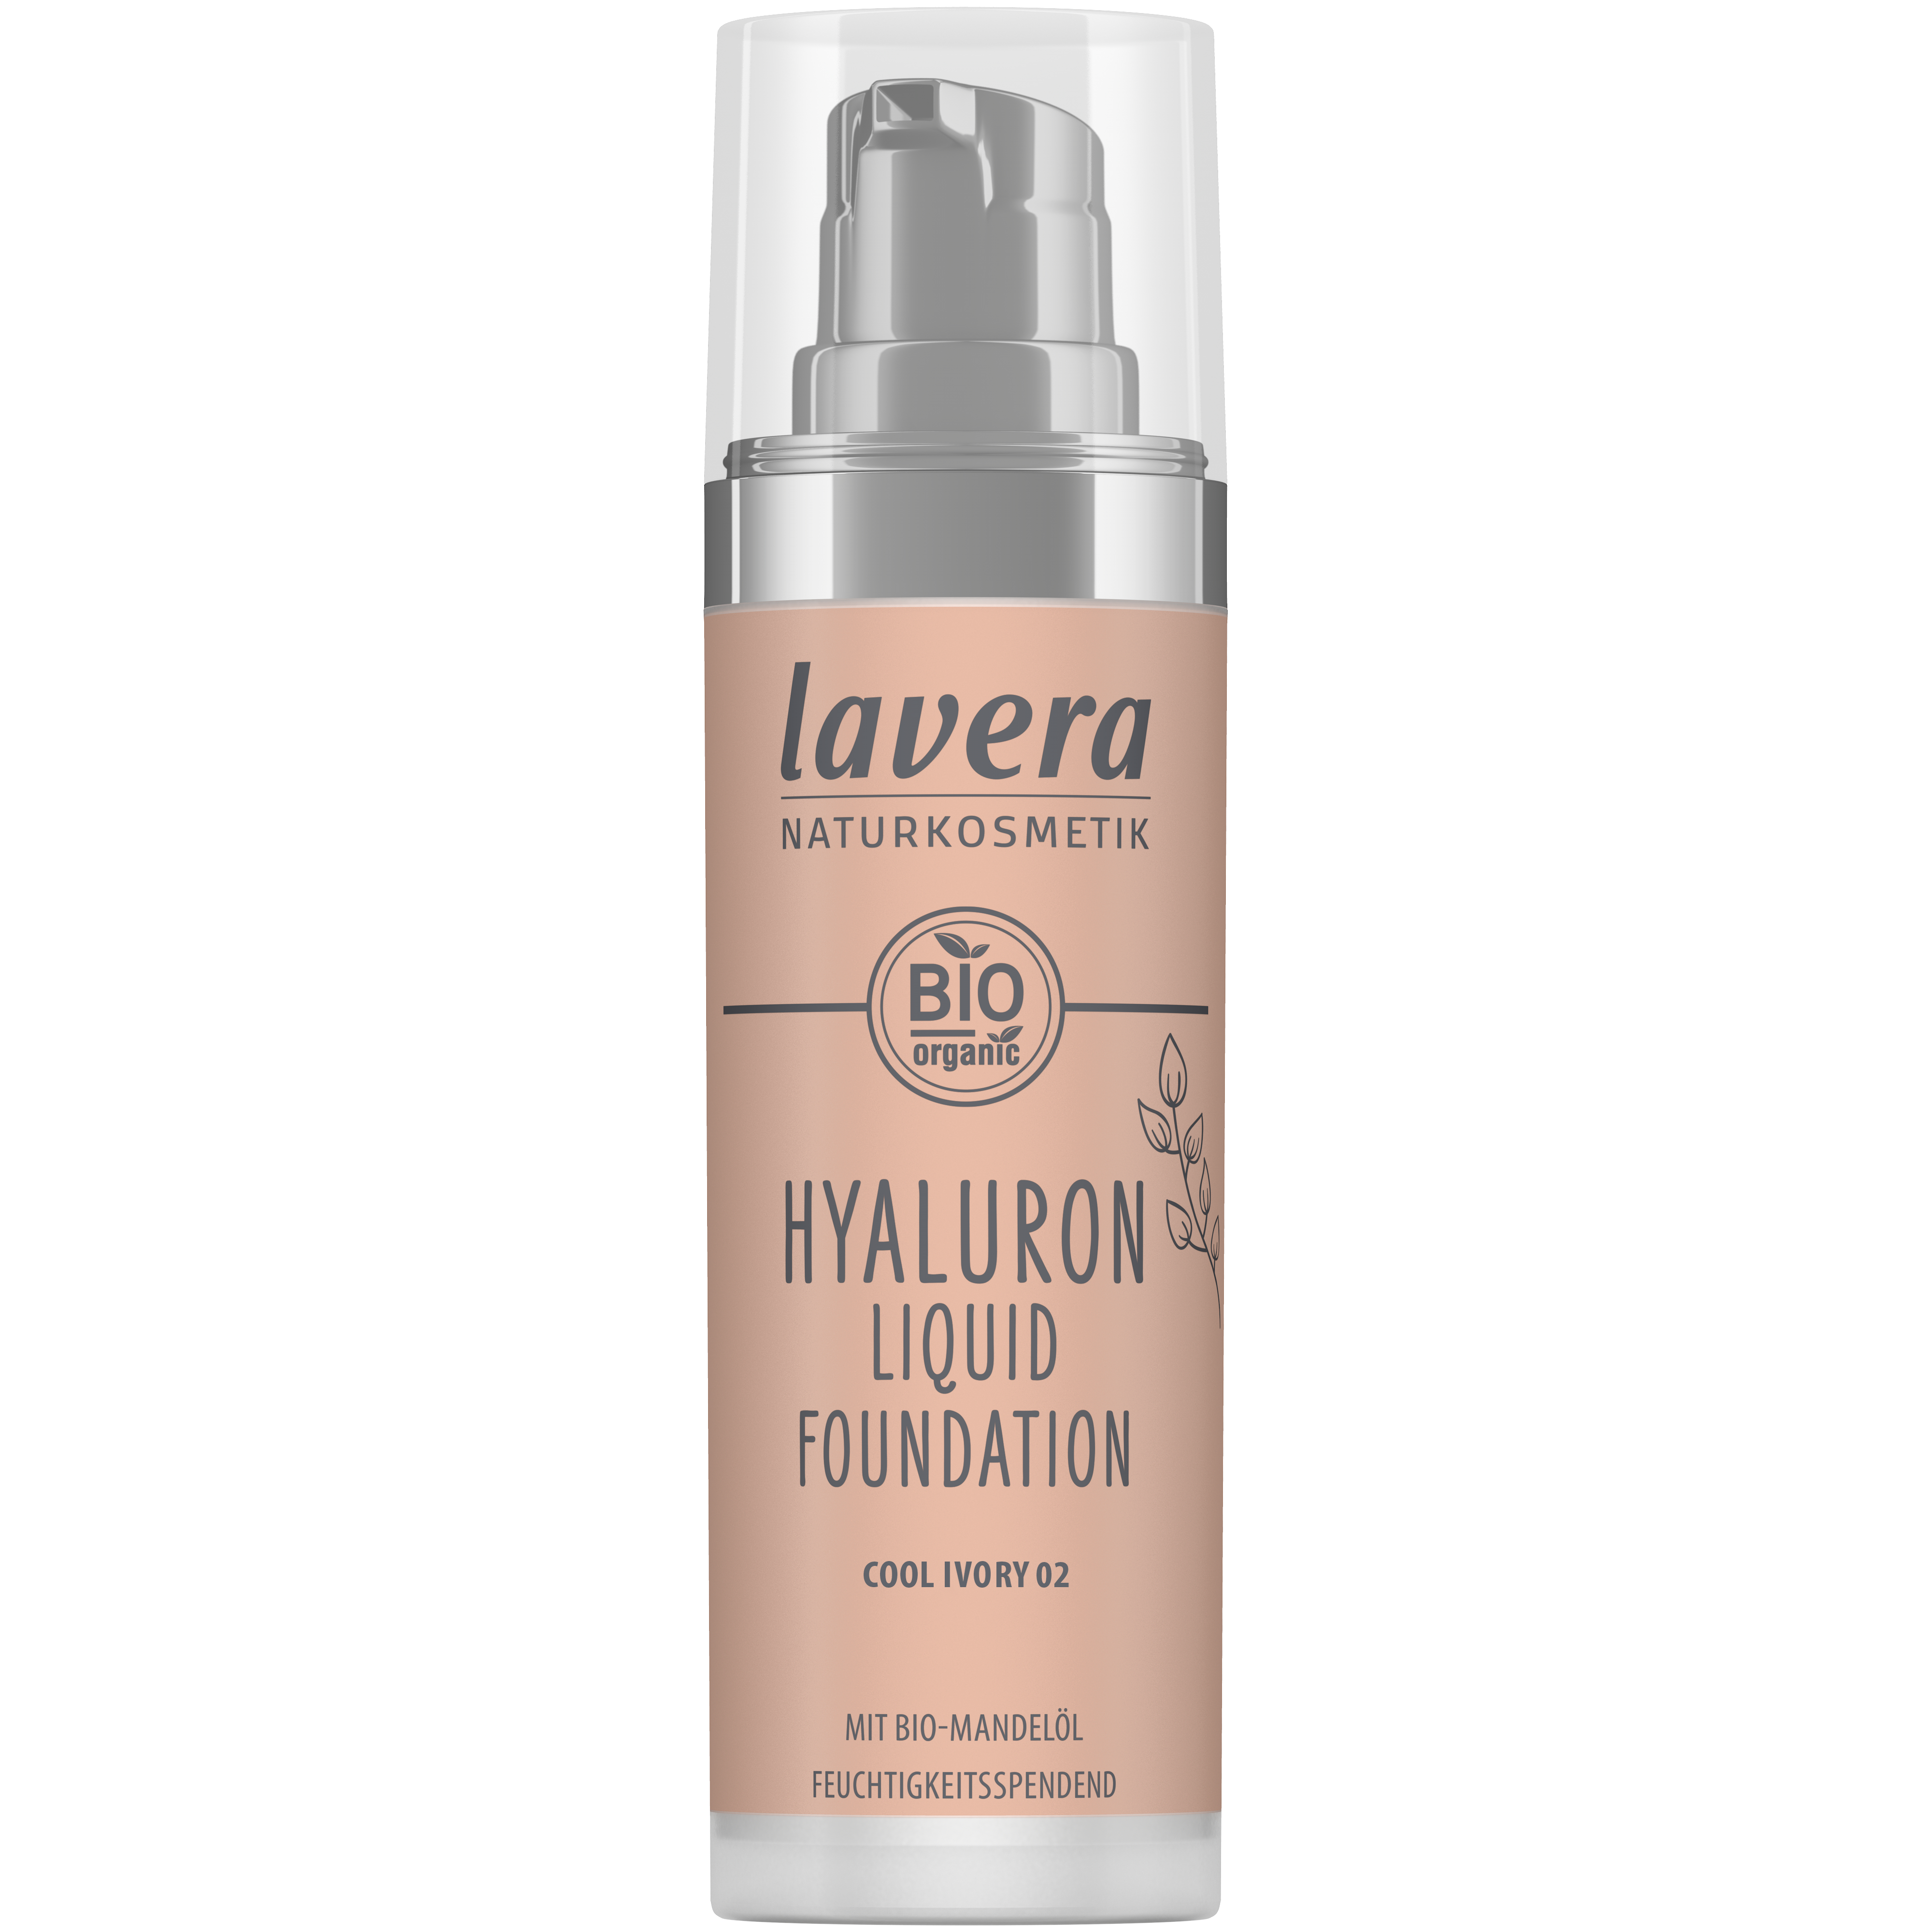 Lavera Hyaluron Liquid Foundation - Cool Ivory 02